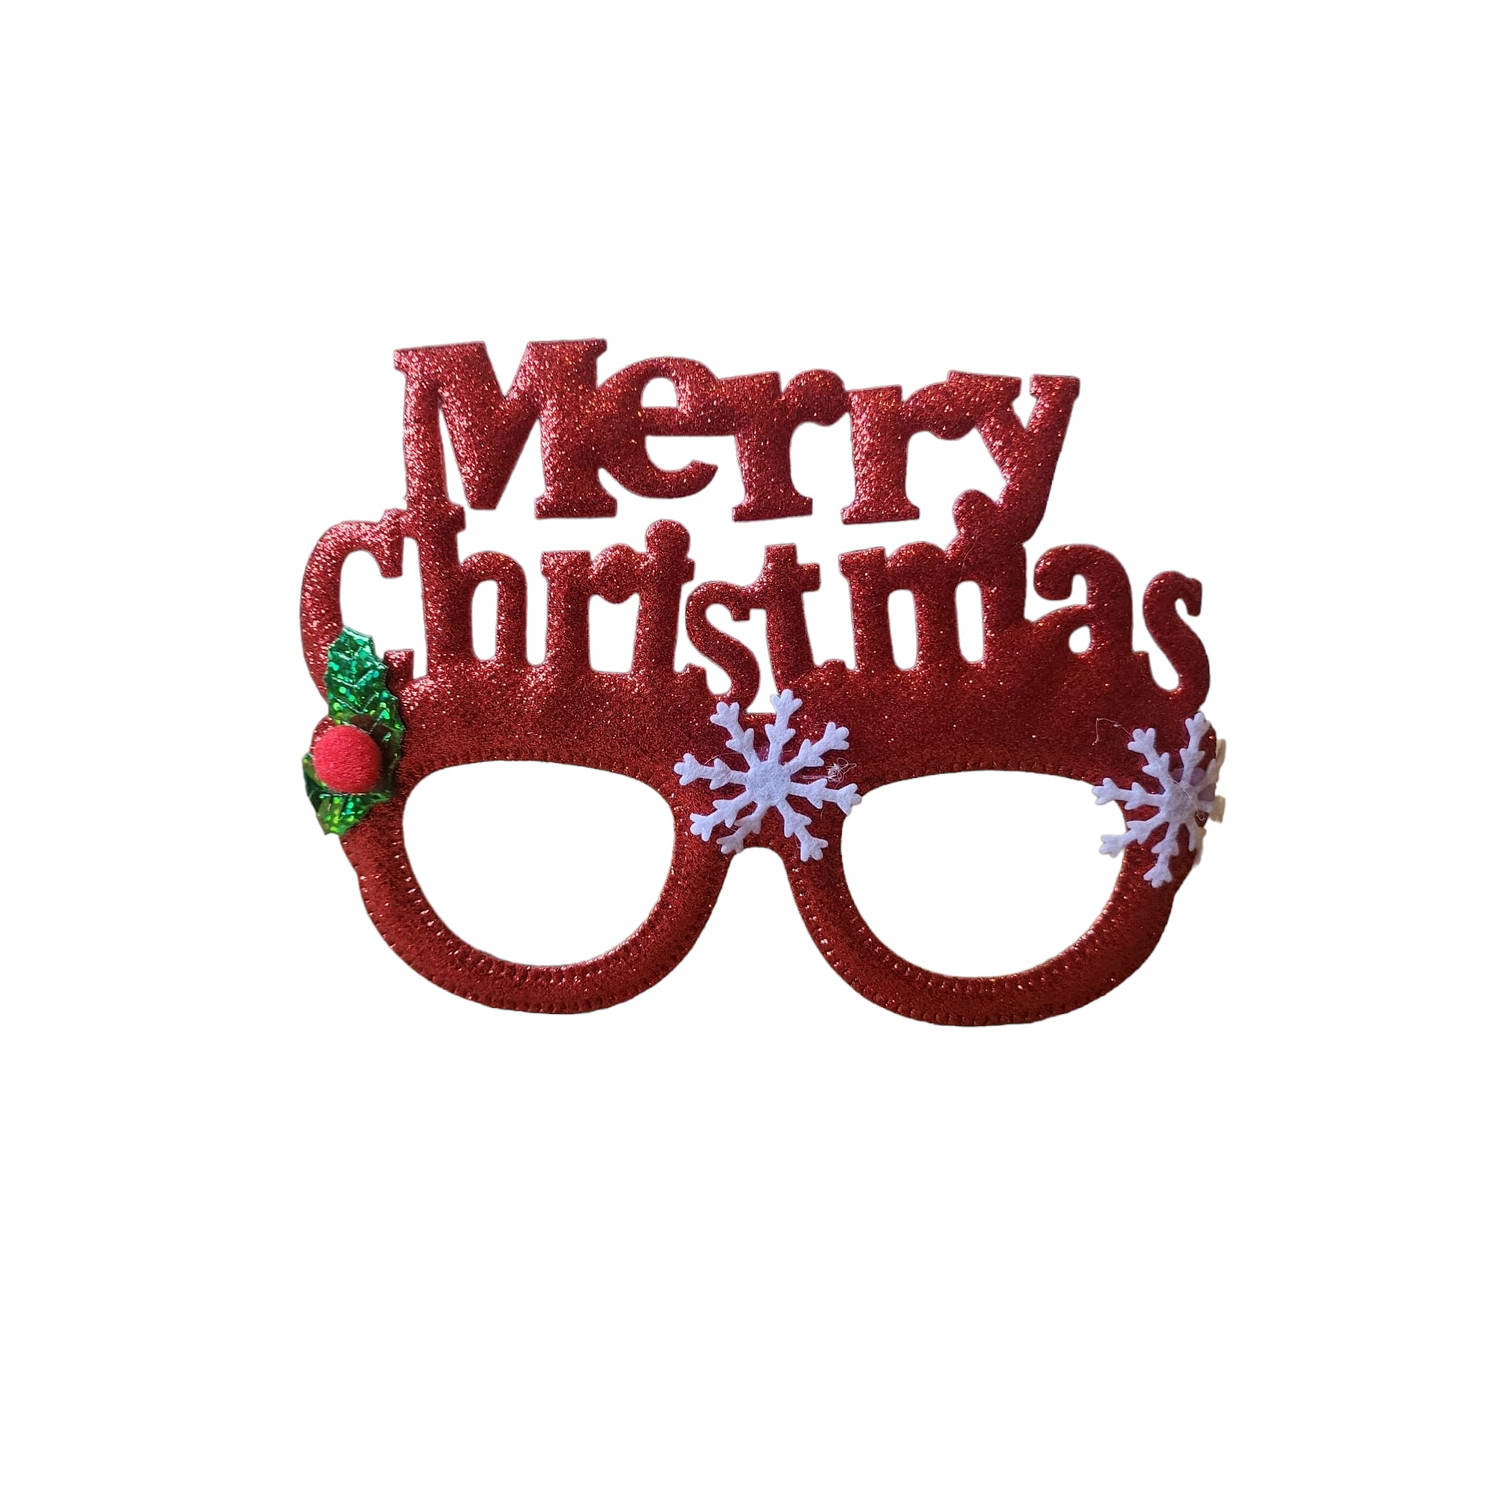 Horend Goed Kerstbril rood Merry Christmas